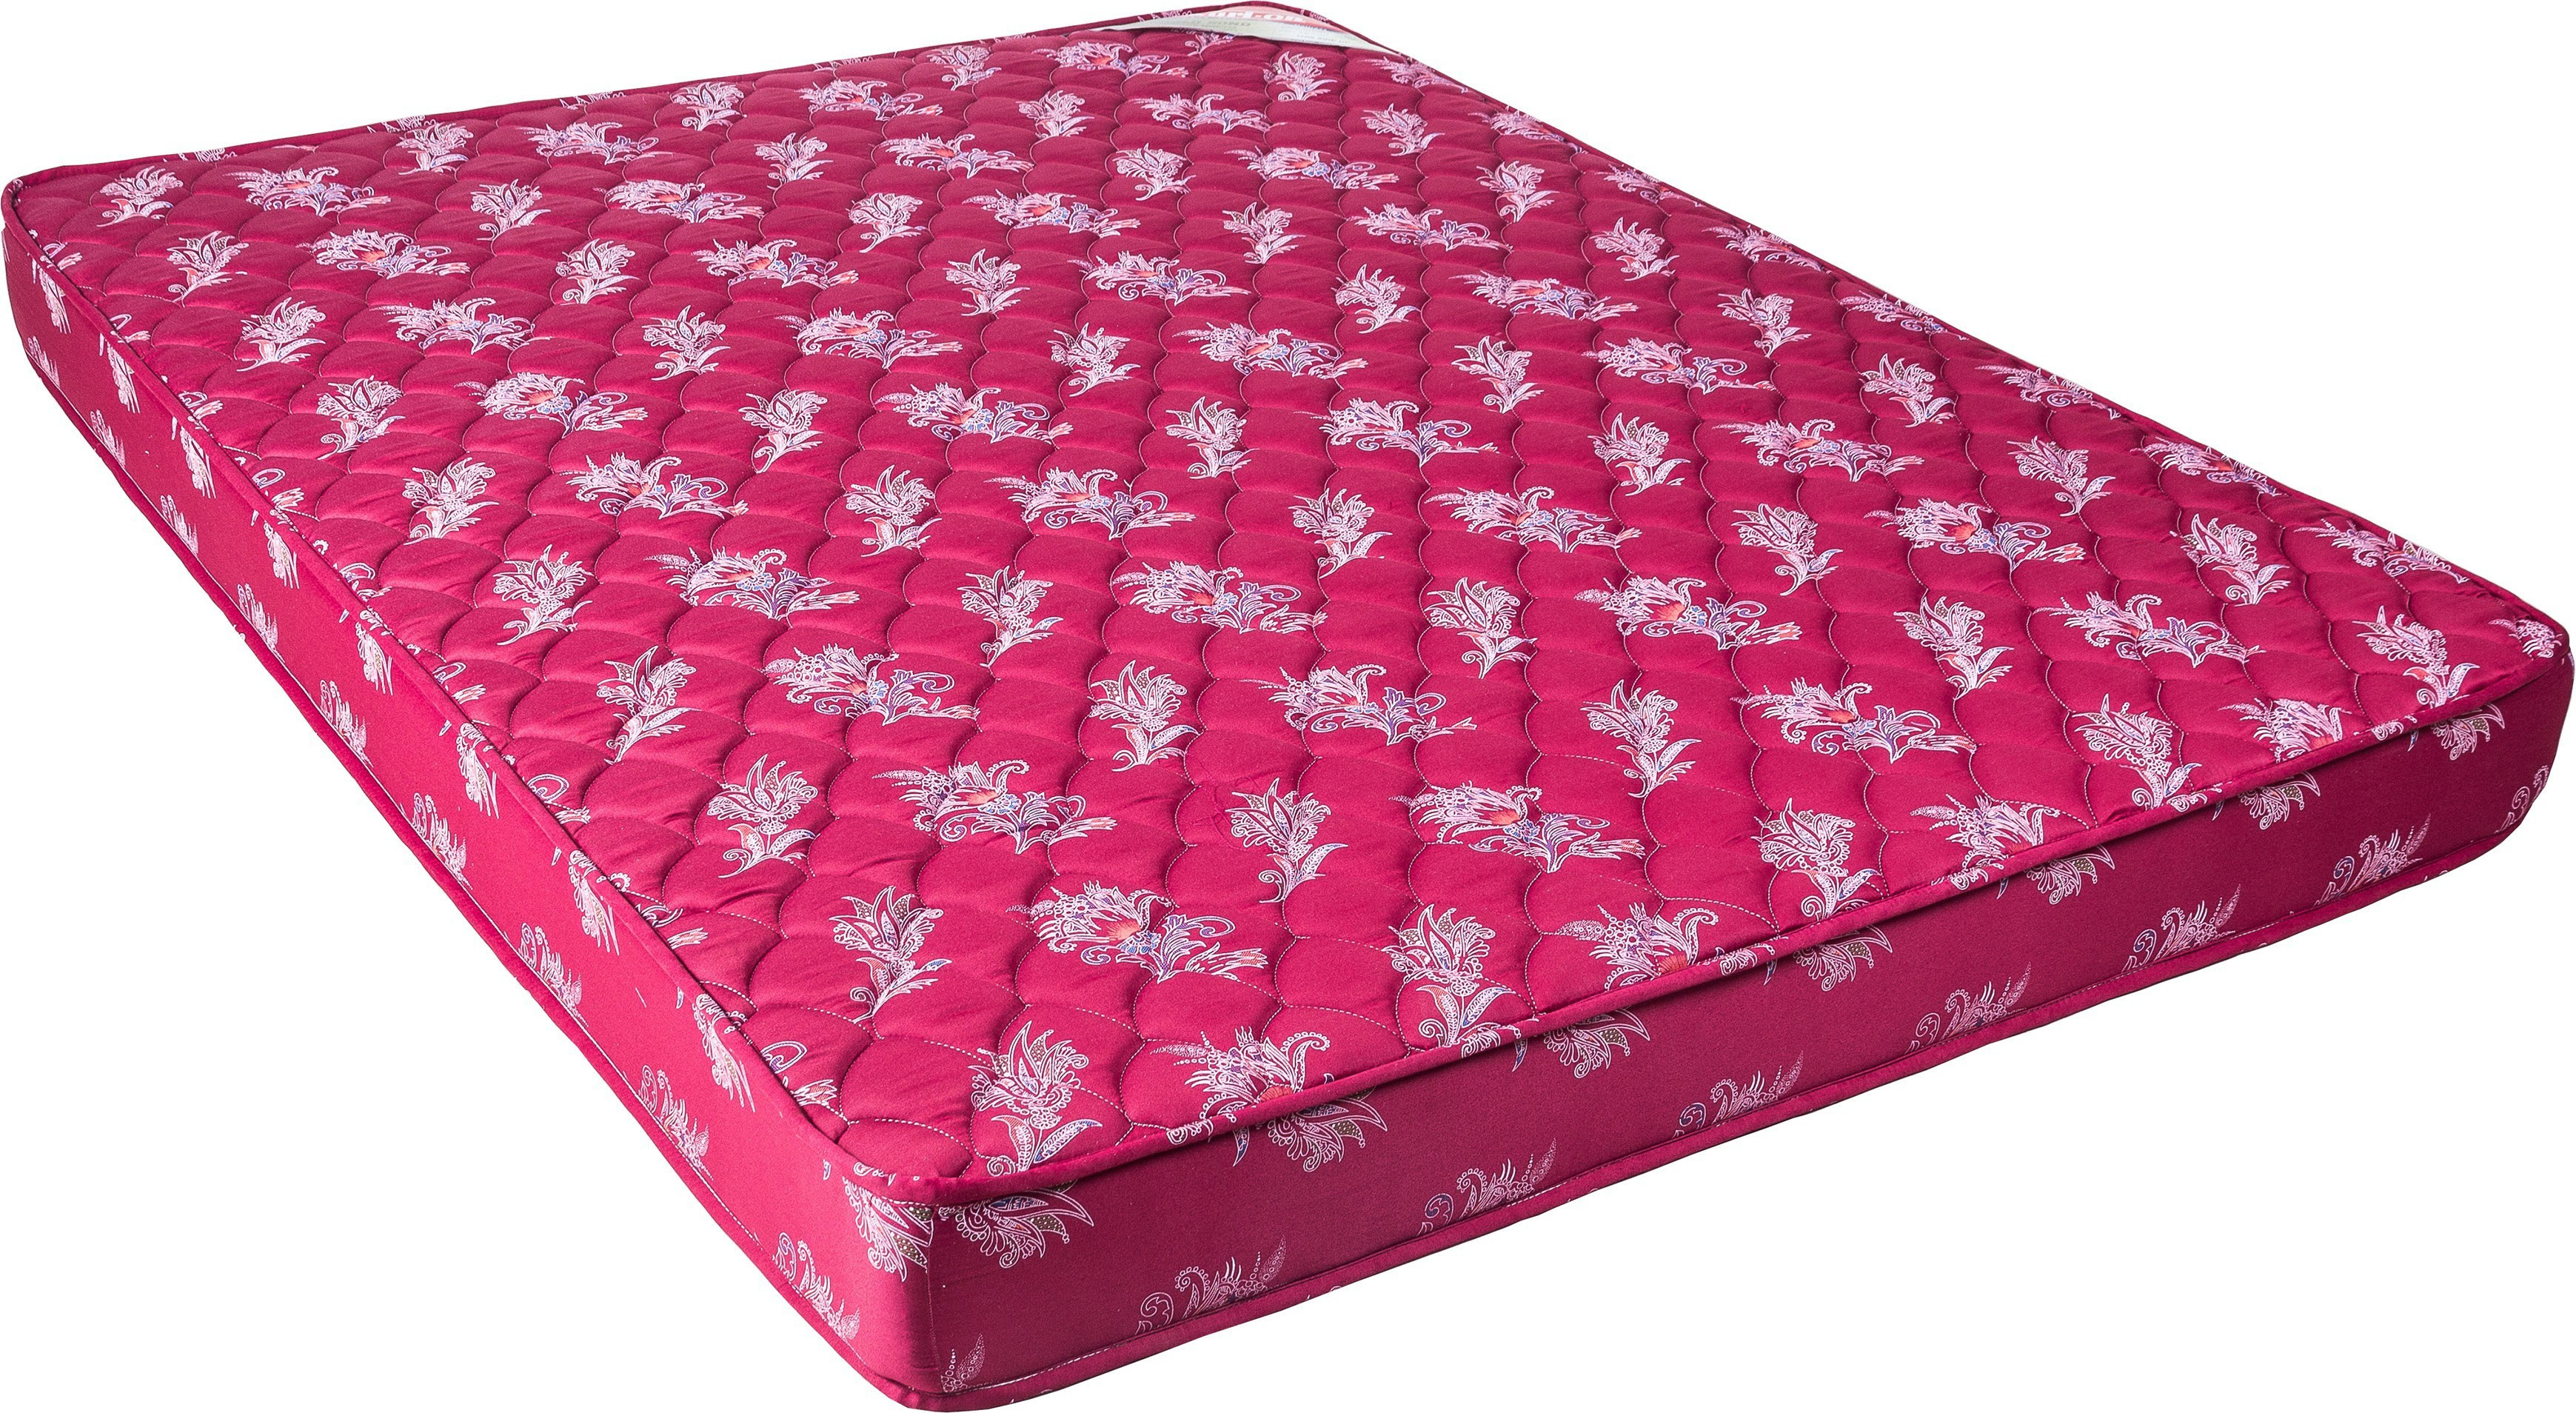 coir foam mattress price list in jaipur